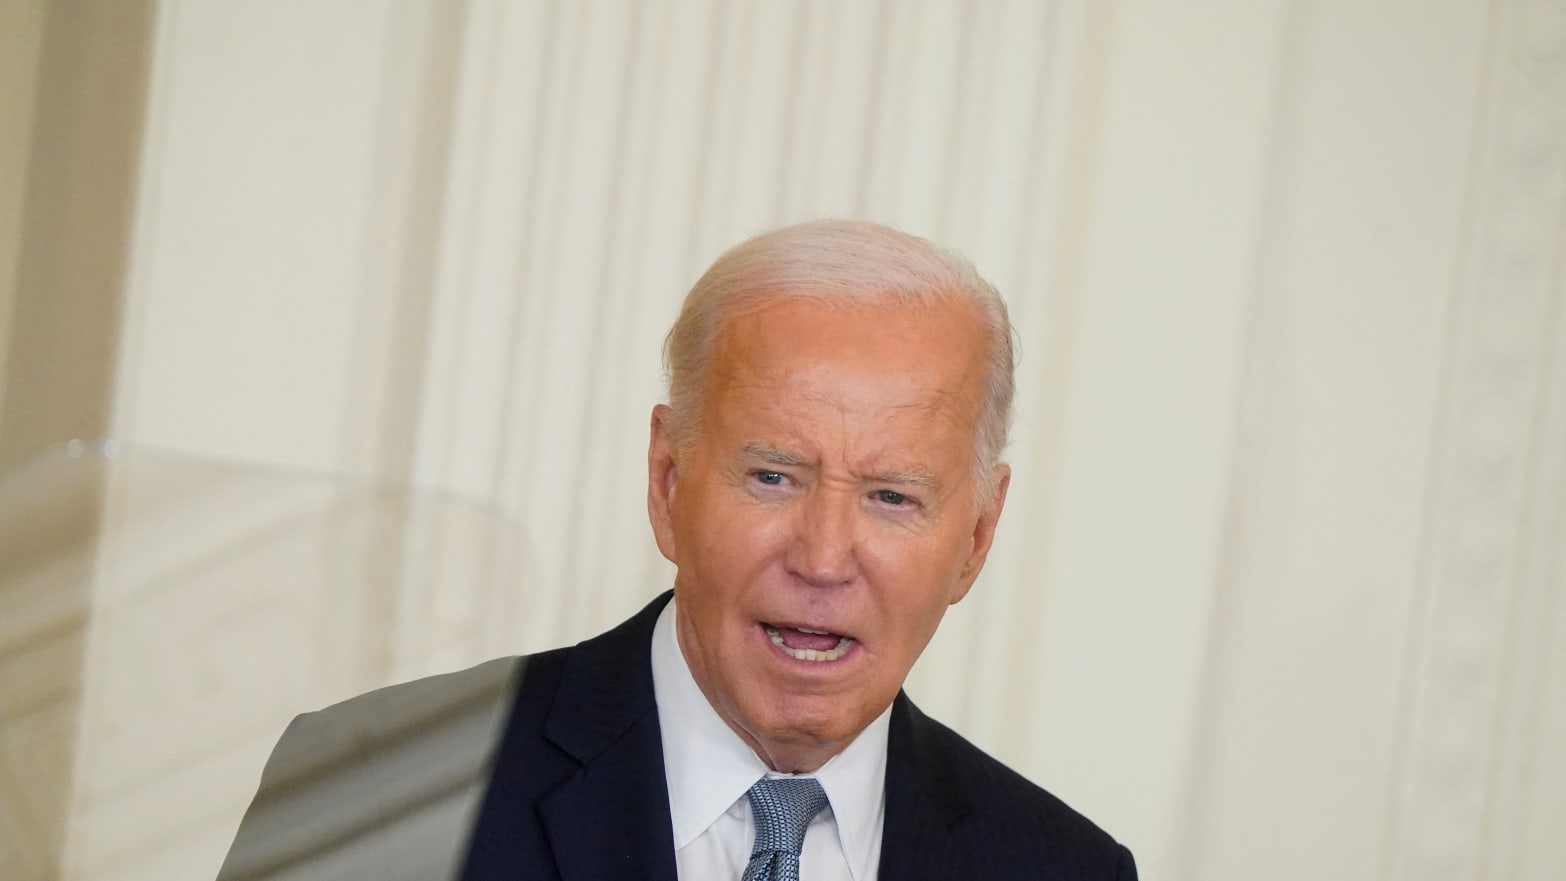 Joe Biden looking at a teleprompter